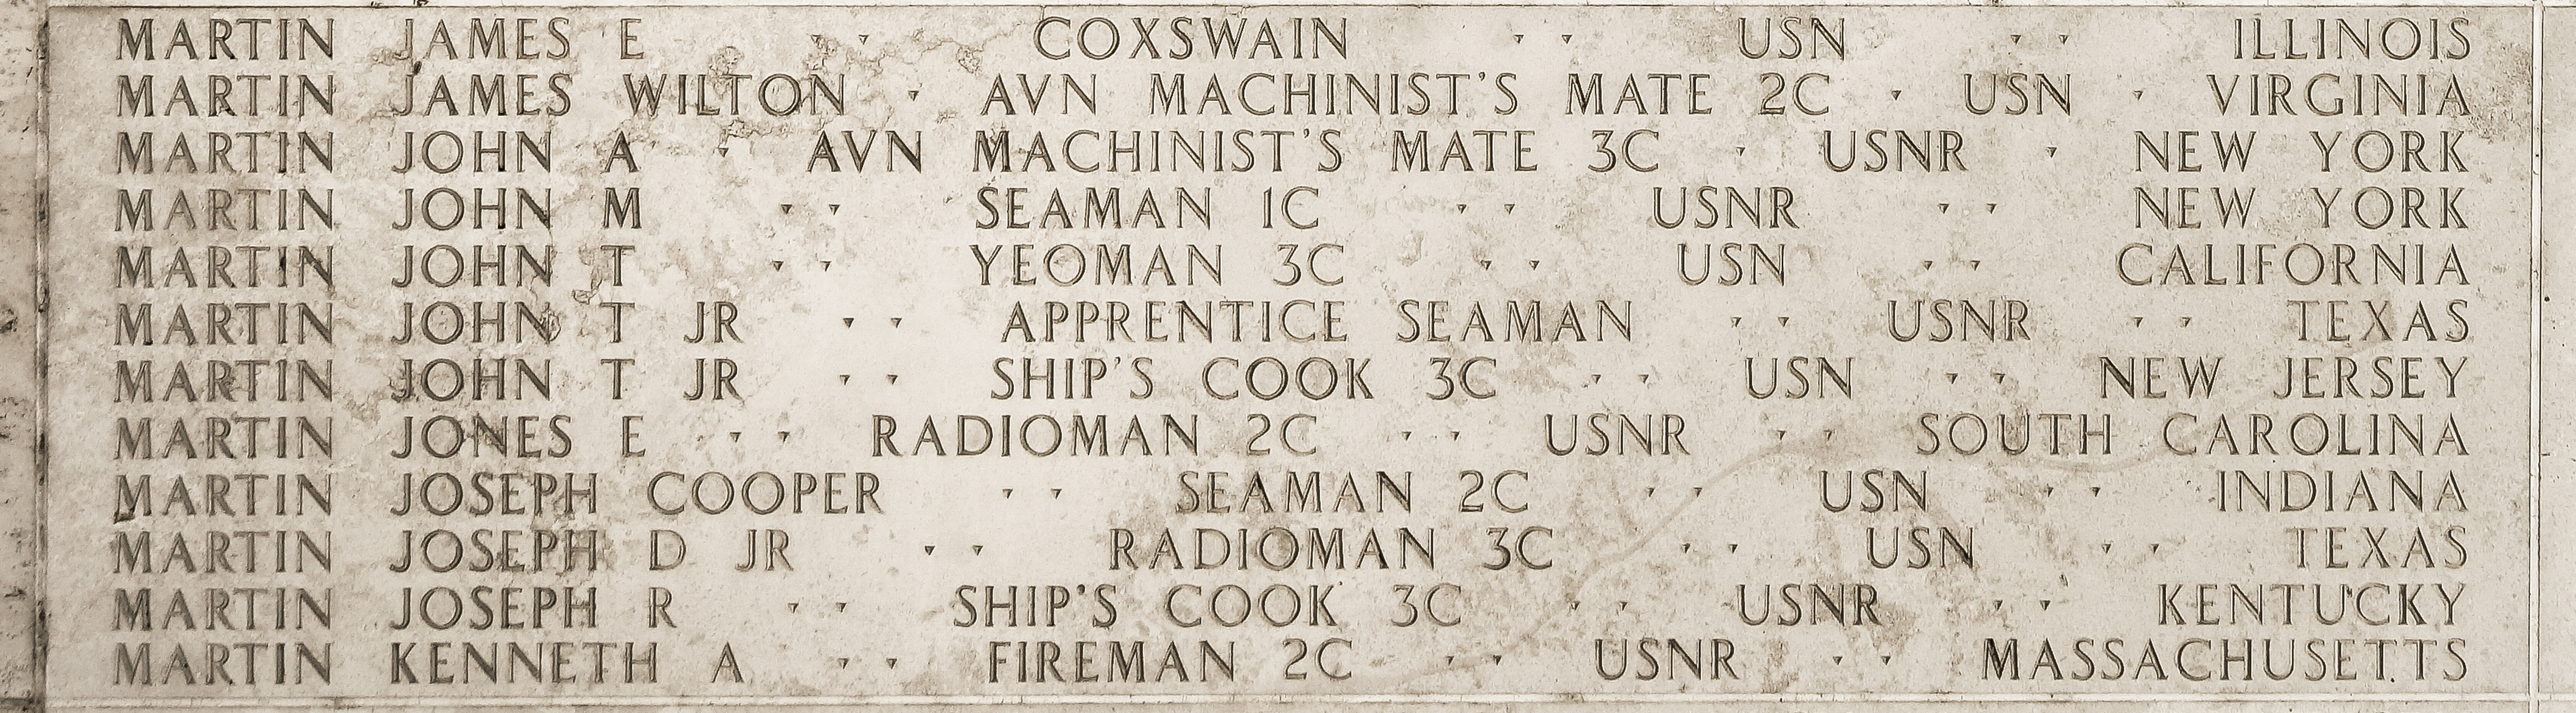 John T. Martin, Apprentice Seaman